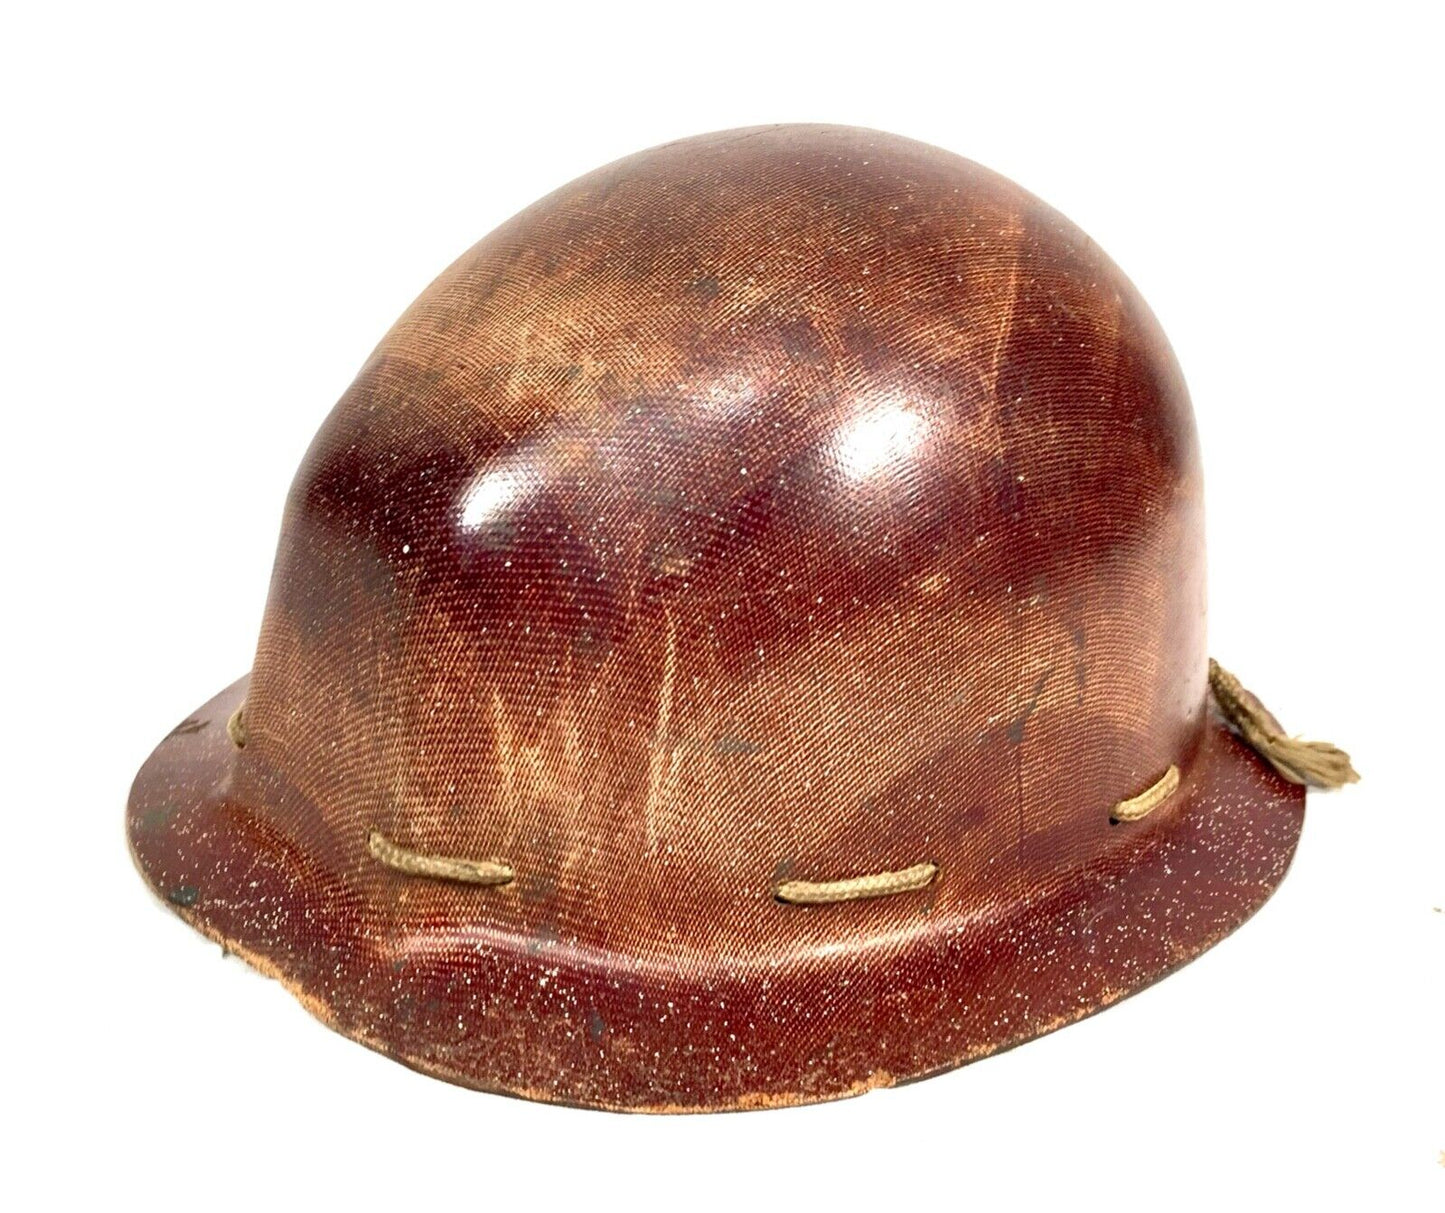 Antique Miners Helmet / Vintage Mining Equipment / c.1900 / Hard Hat